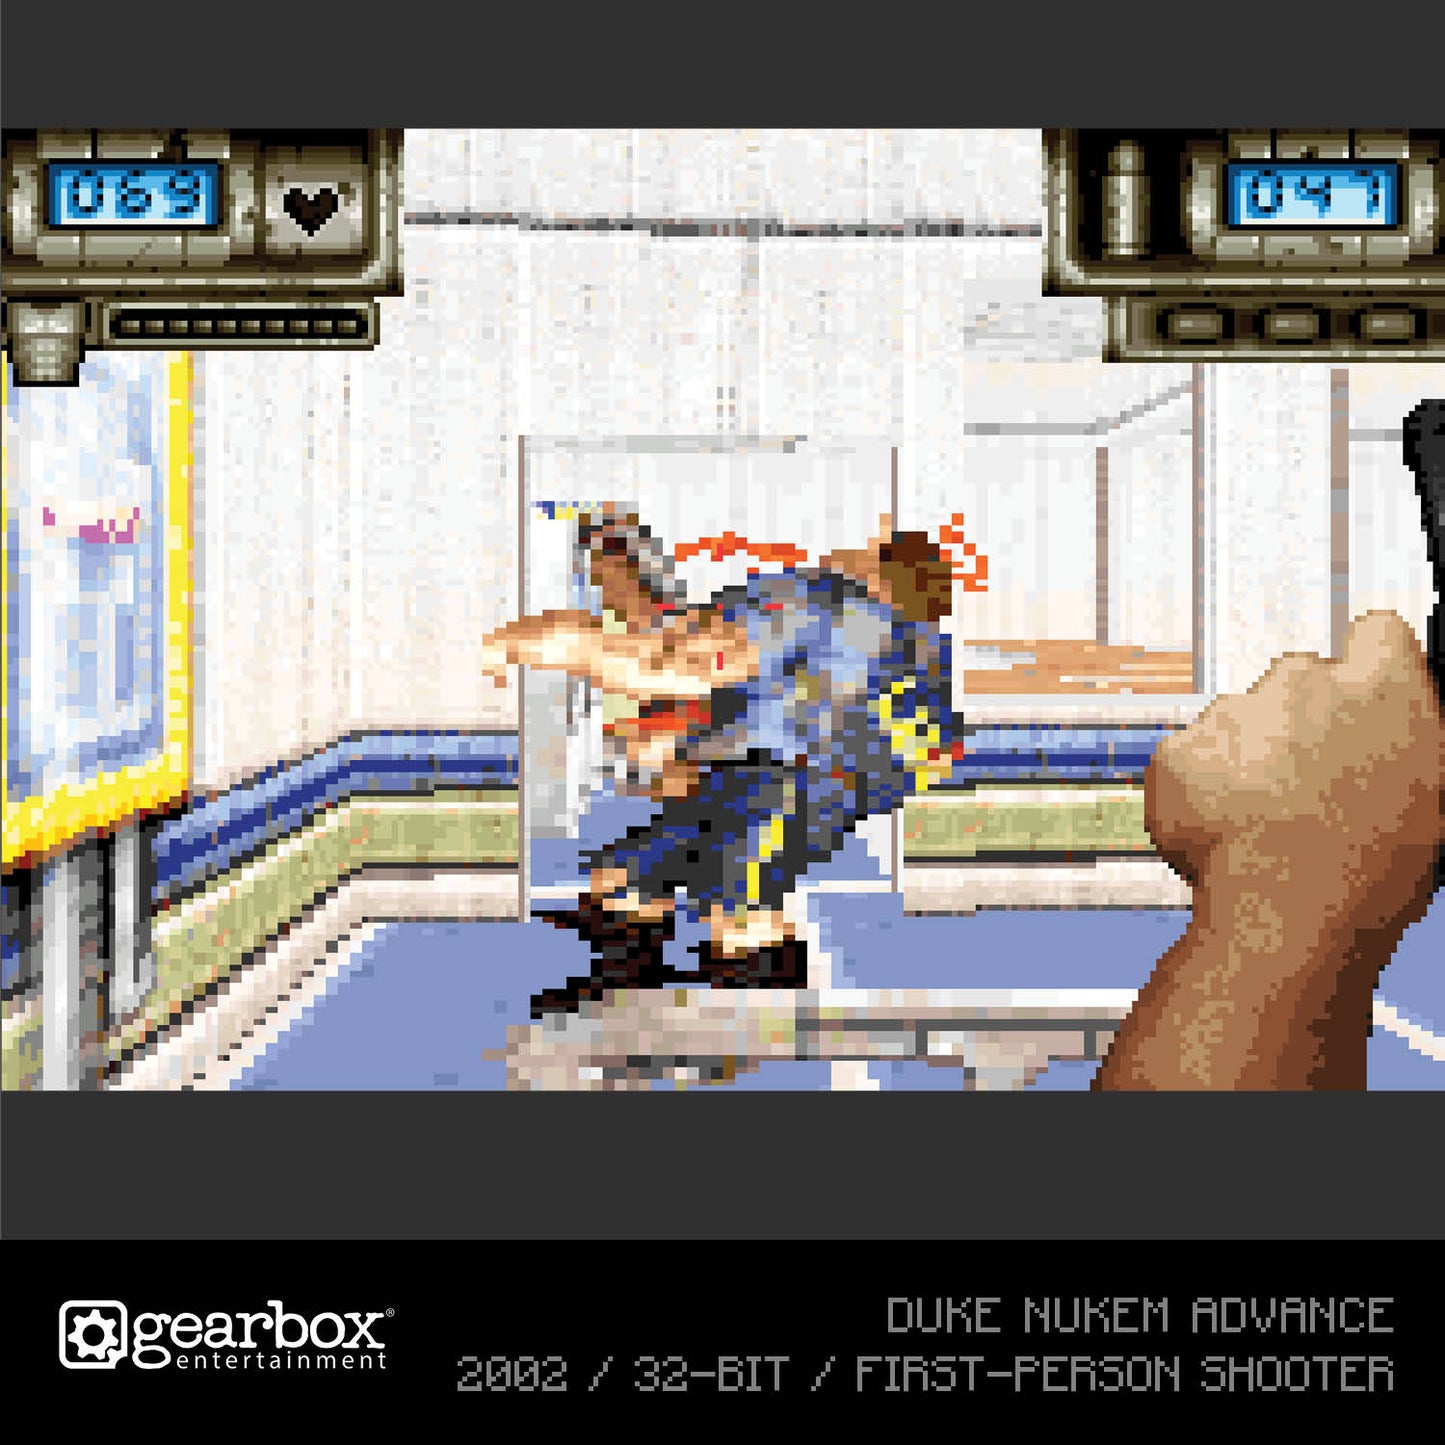 Evercade Duke Nukem Collection 1 & 2 Double Pack